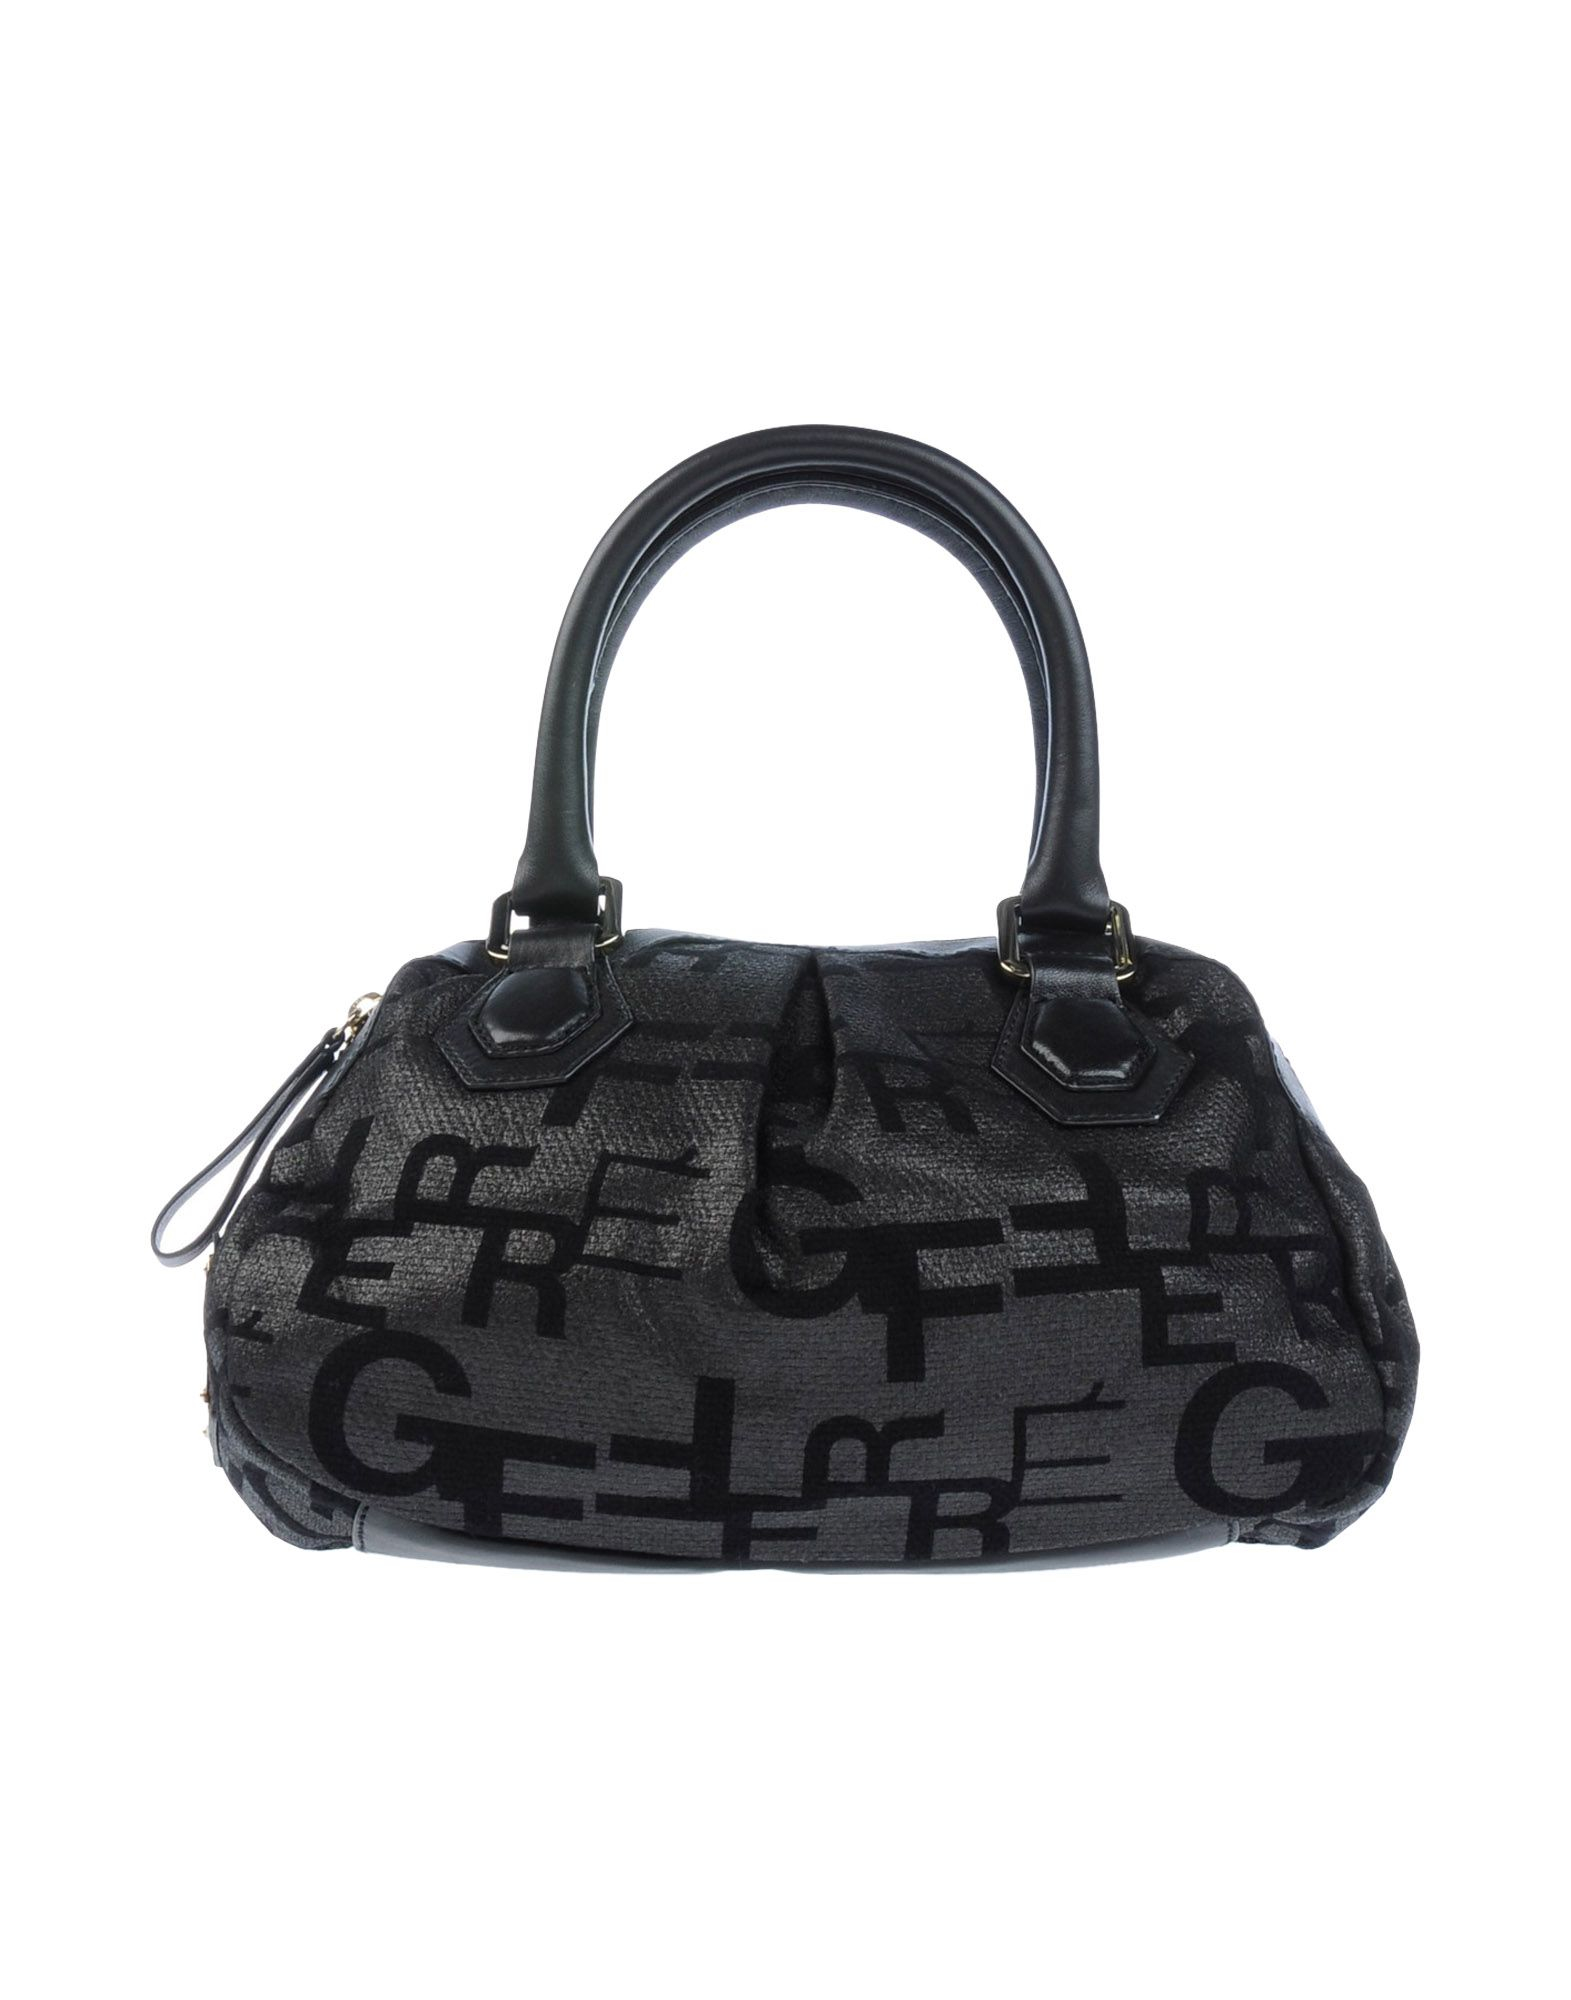 Lyst - Gianfranco Ferré Handbag in Black